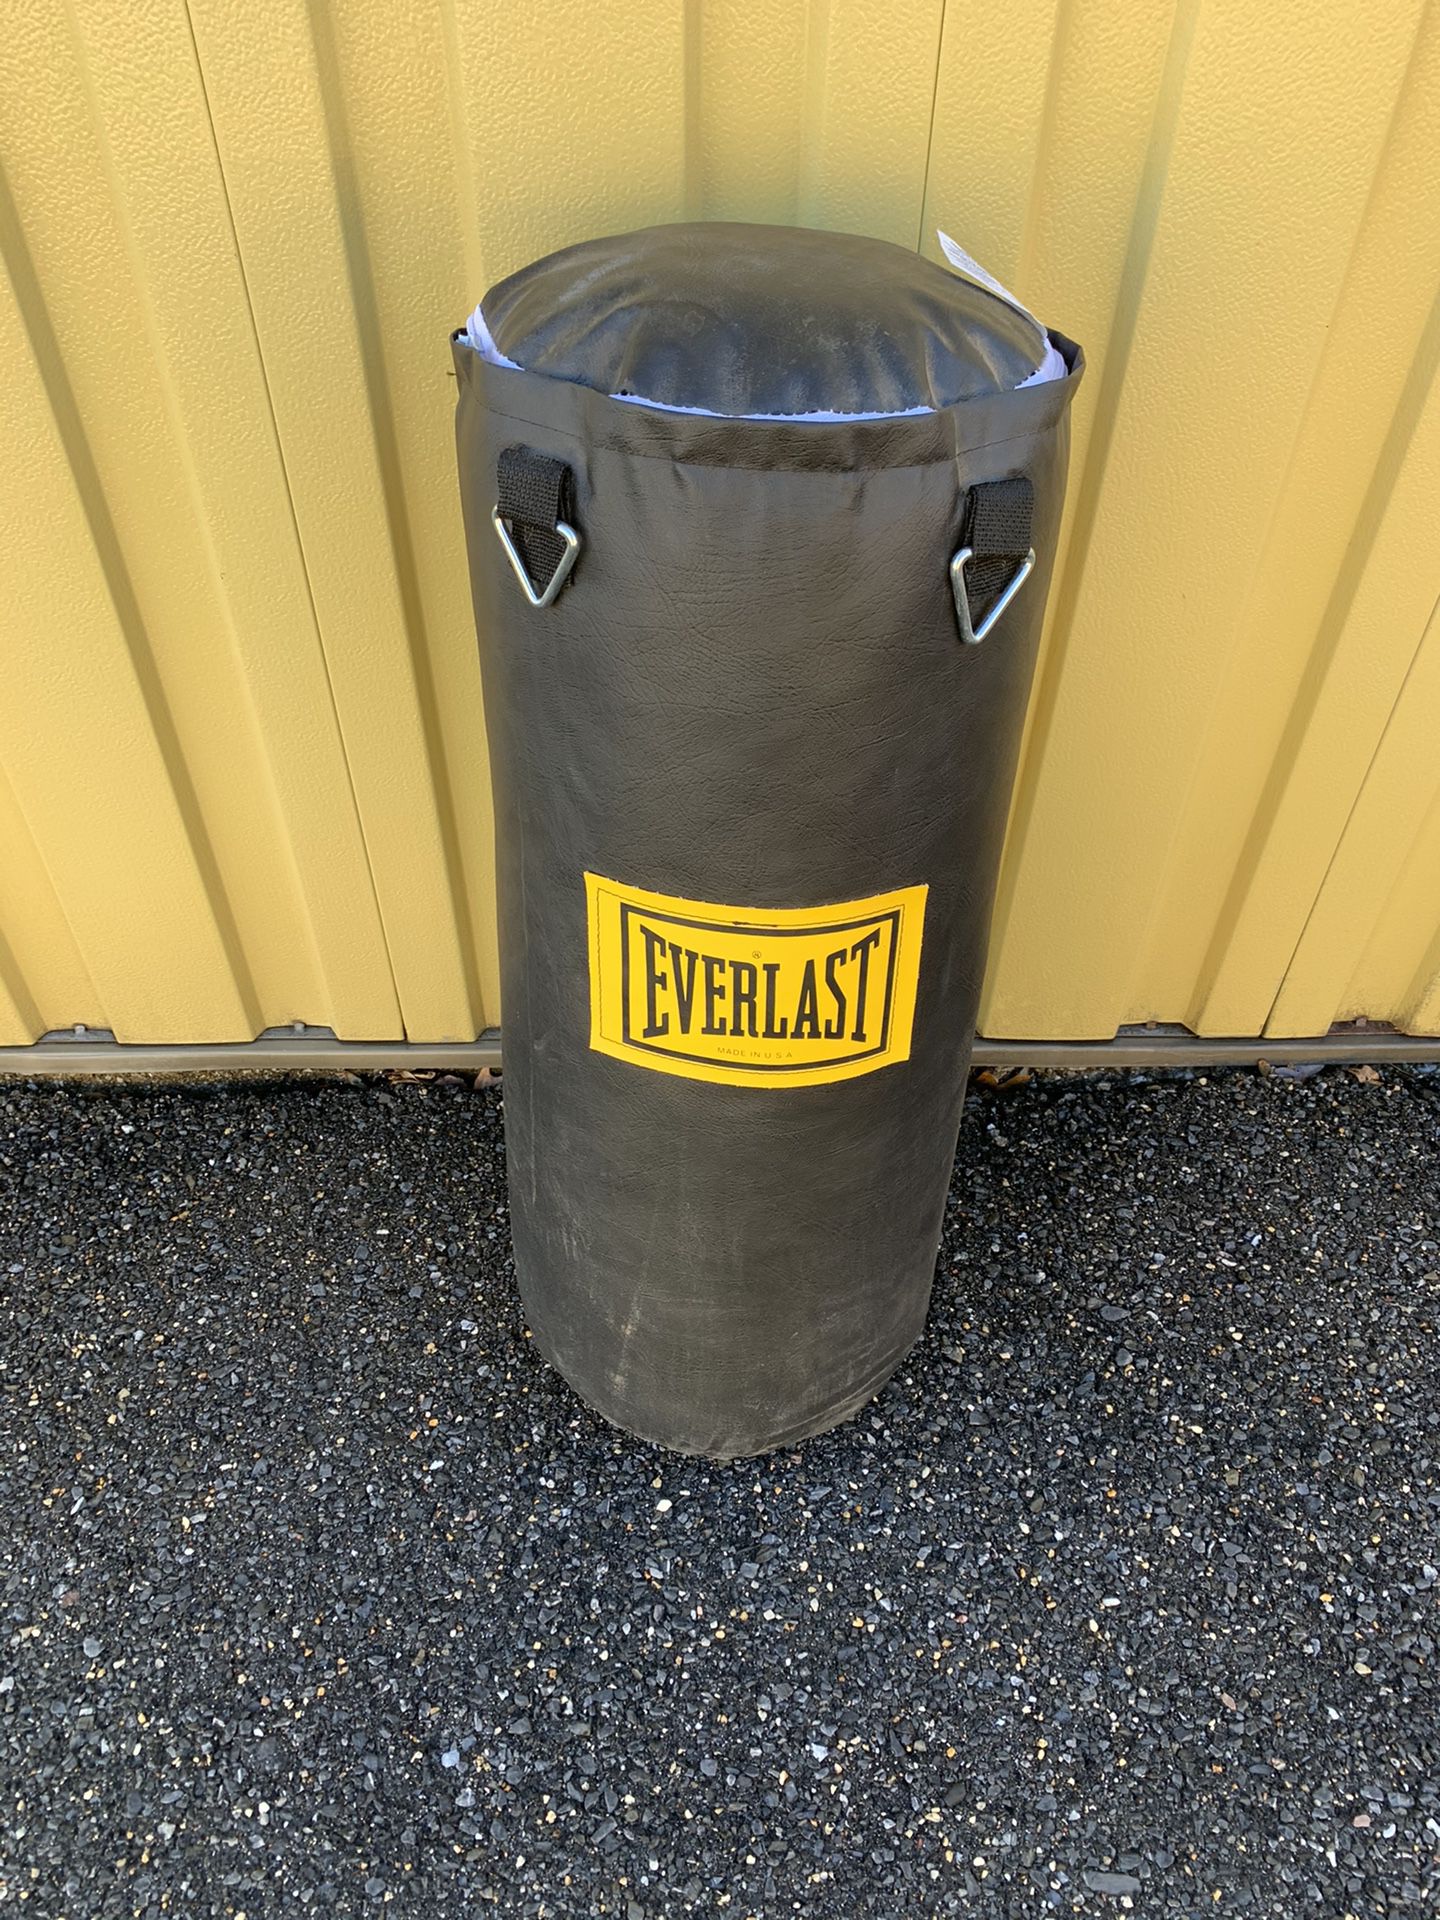 Everlast heavy/punching bag